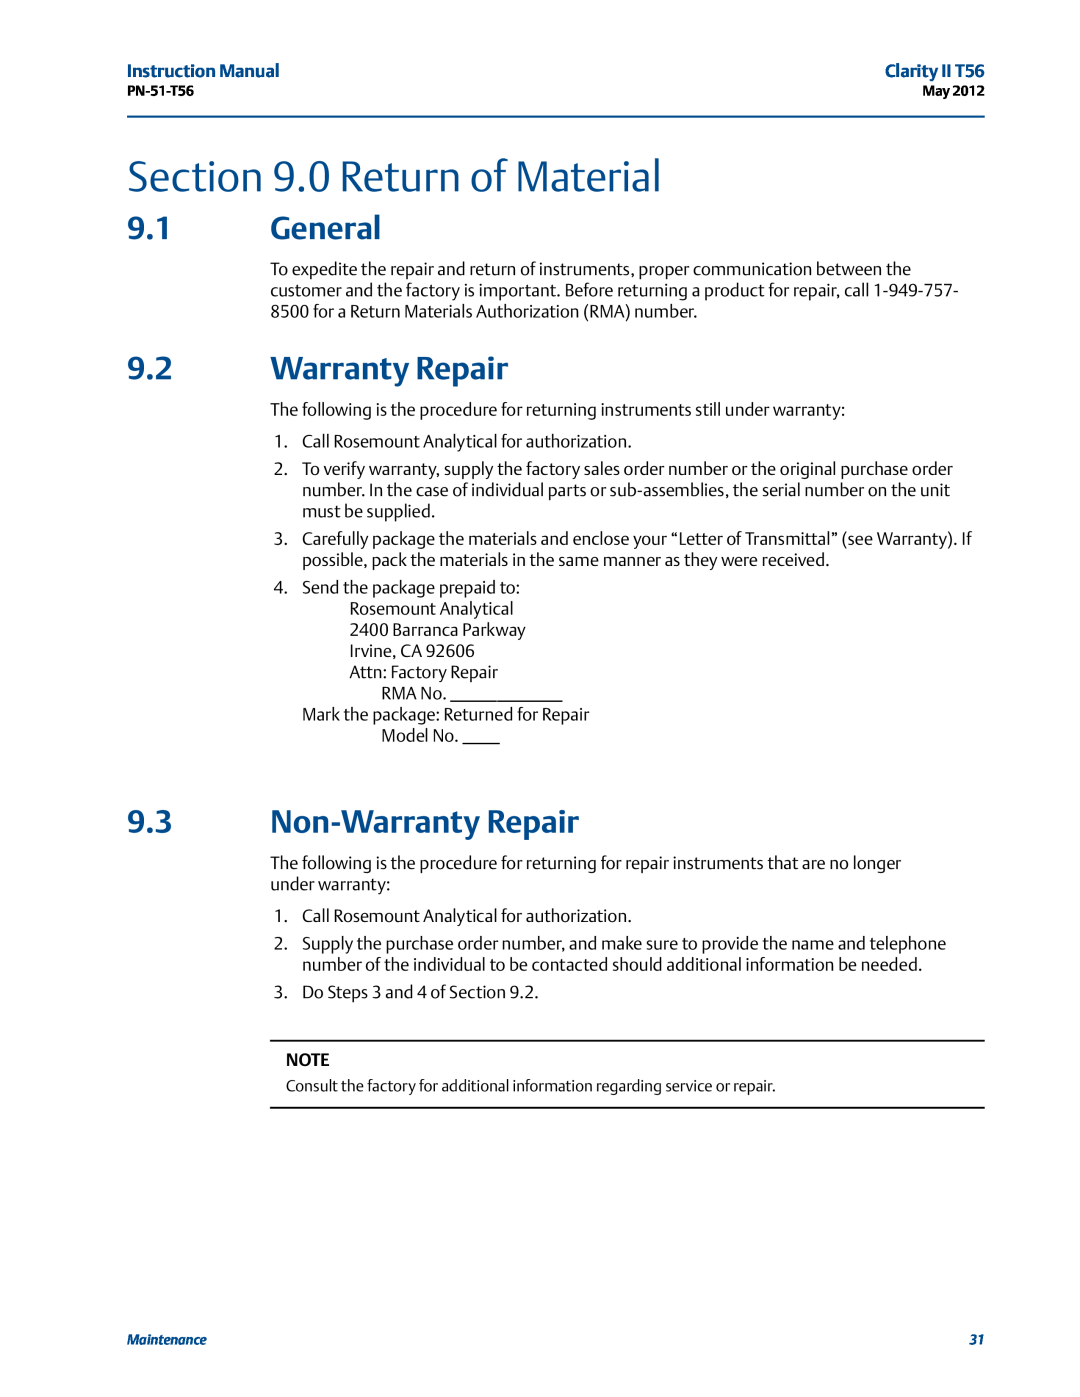 Emerson PN-51-T56 instruction manual 0 Return of Material, General, Non-Warranty Repair 